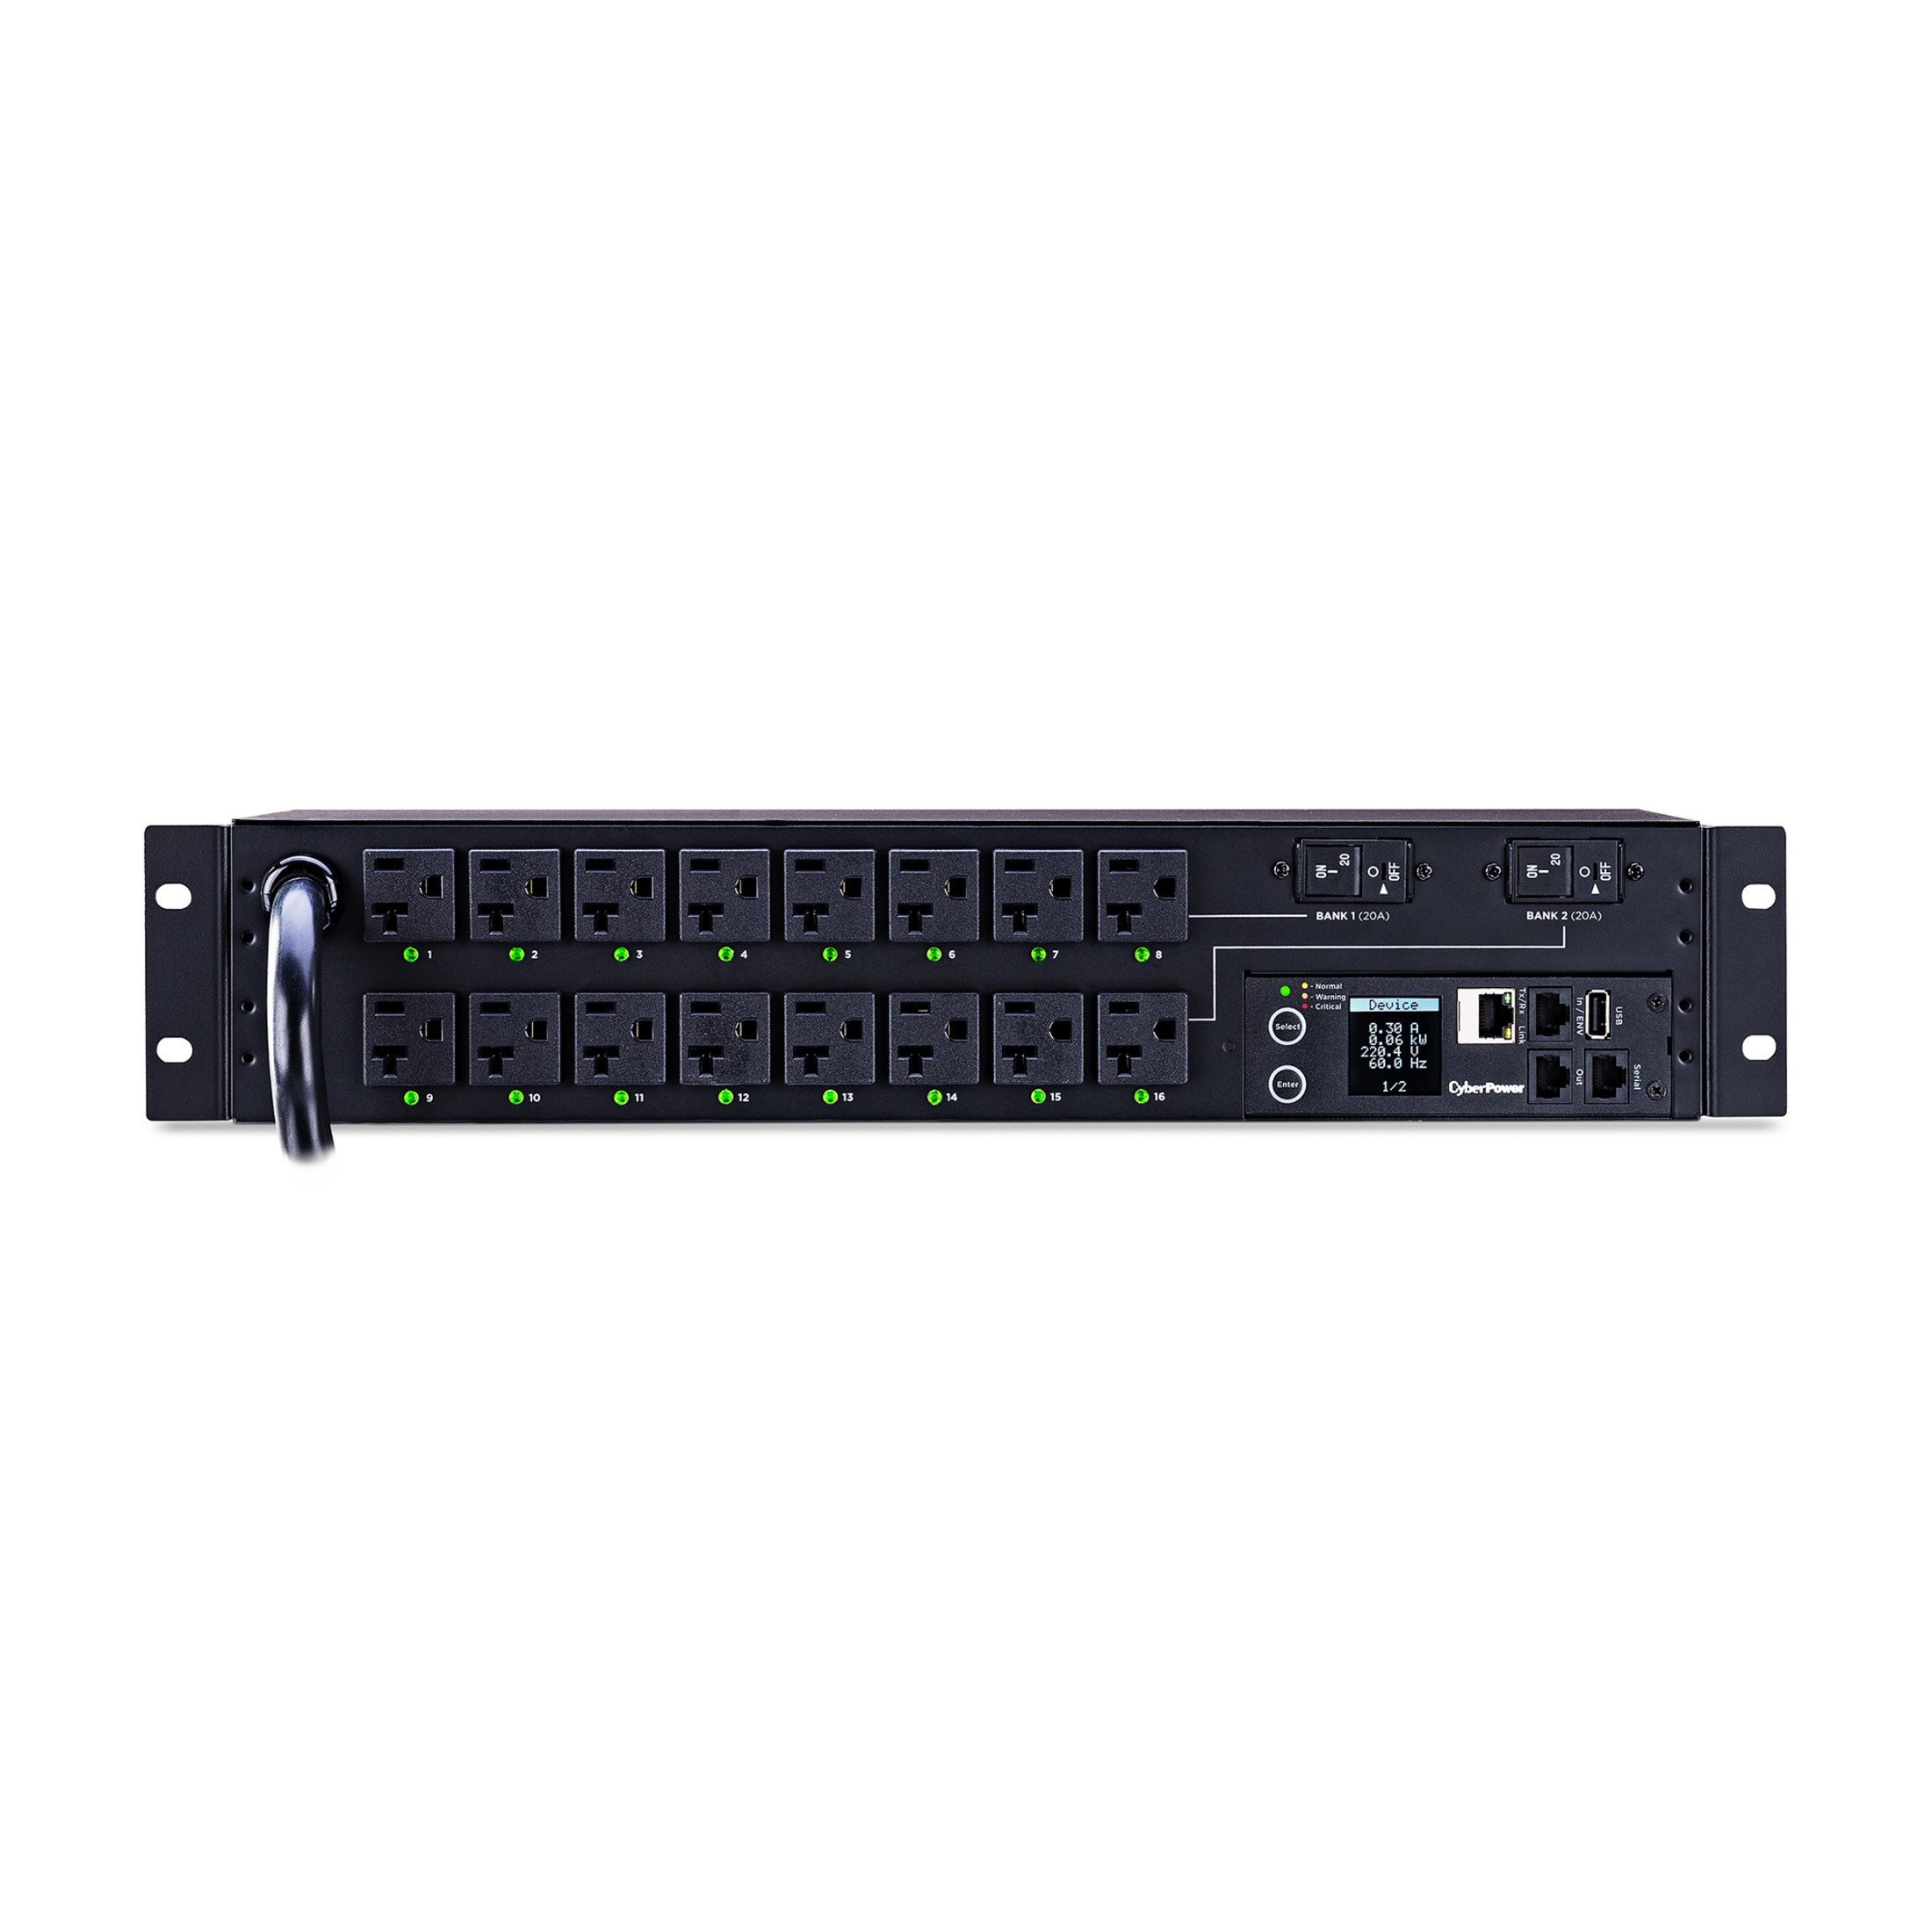 Cyber Power PDU41003 Single Phase 100120 VAC 30A Switched PDU16 Outlets, 12 ft, NEMA L5-30P, Horizontal, 2U, SNMP,  Warranty PDU41003